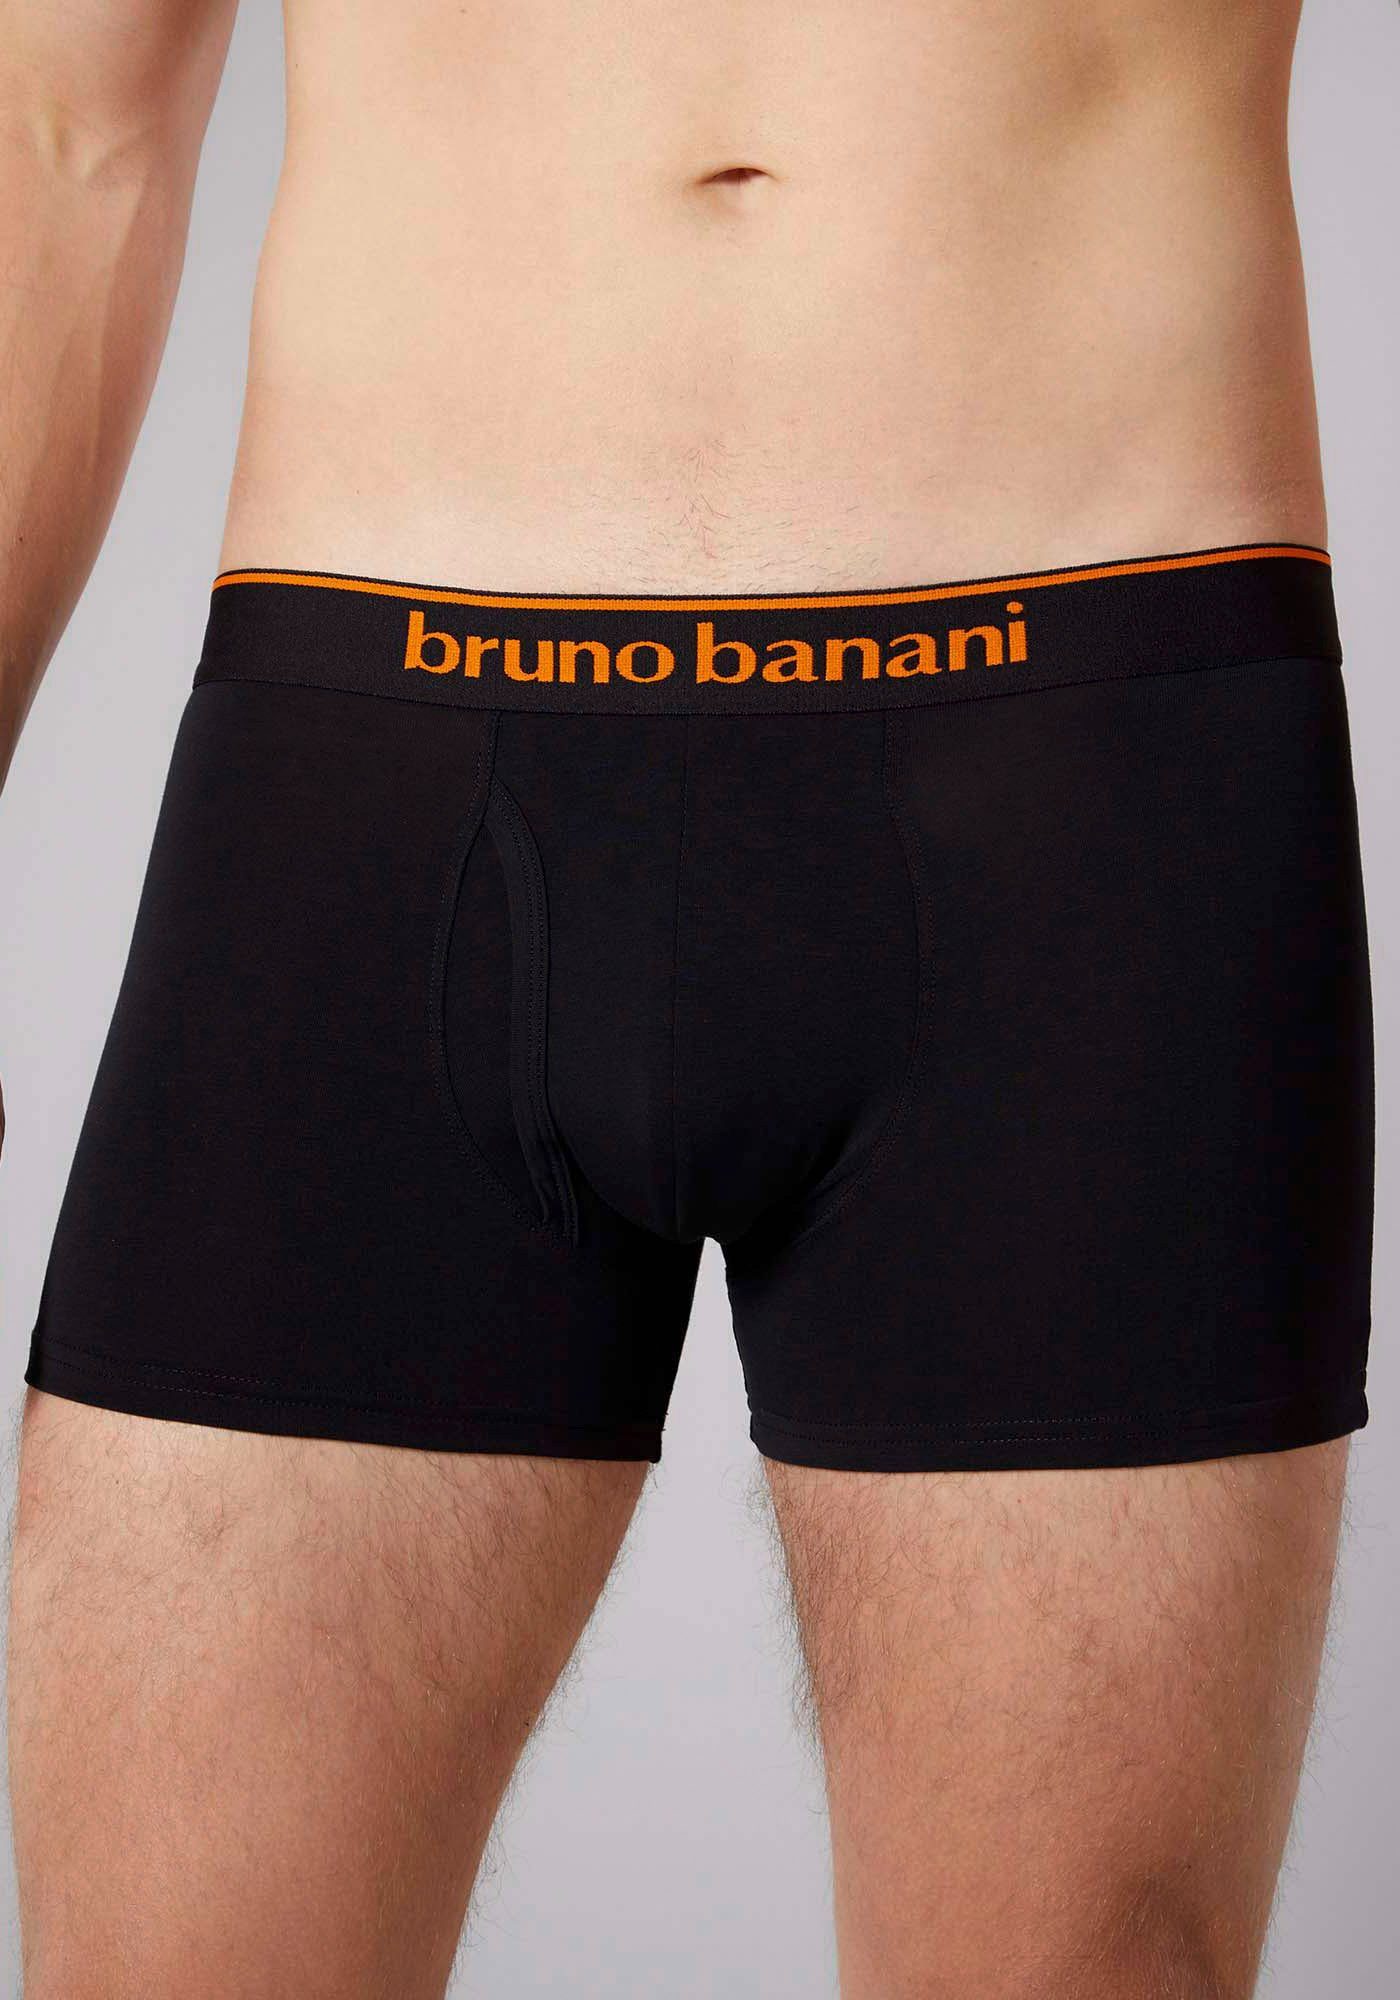 Bruno 2-St) Banani schwarz Boxershorts Kontrastfarbene Details (Packung, Short Access 2Pack Quick